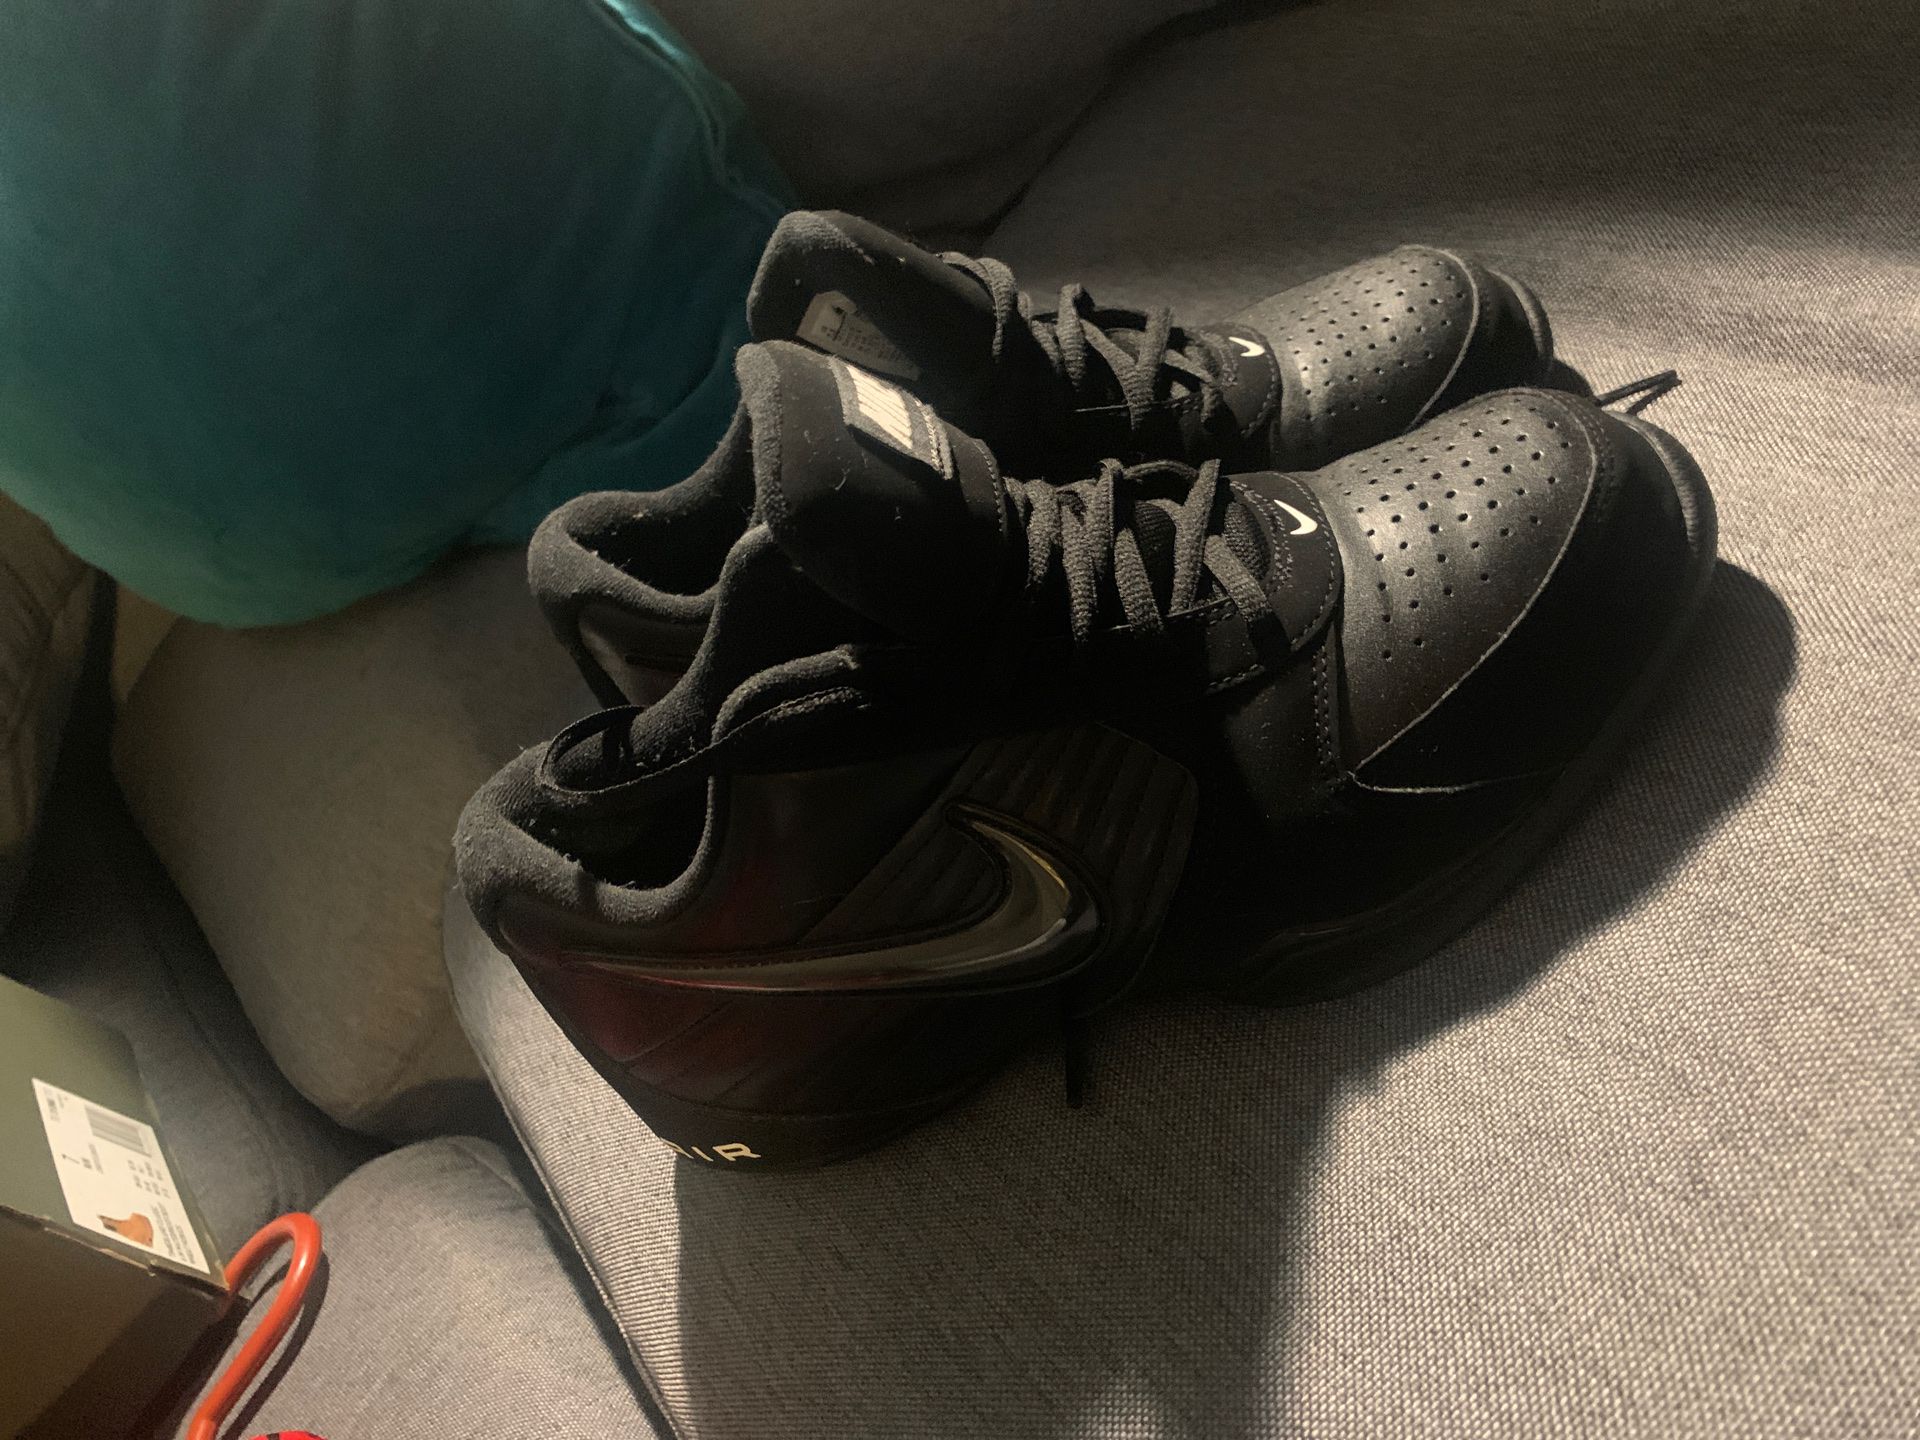 Men’s Nike size 7.5